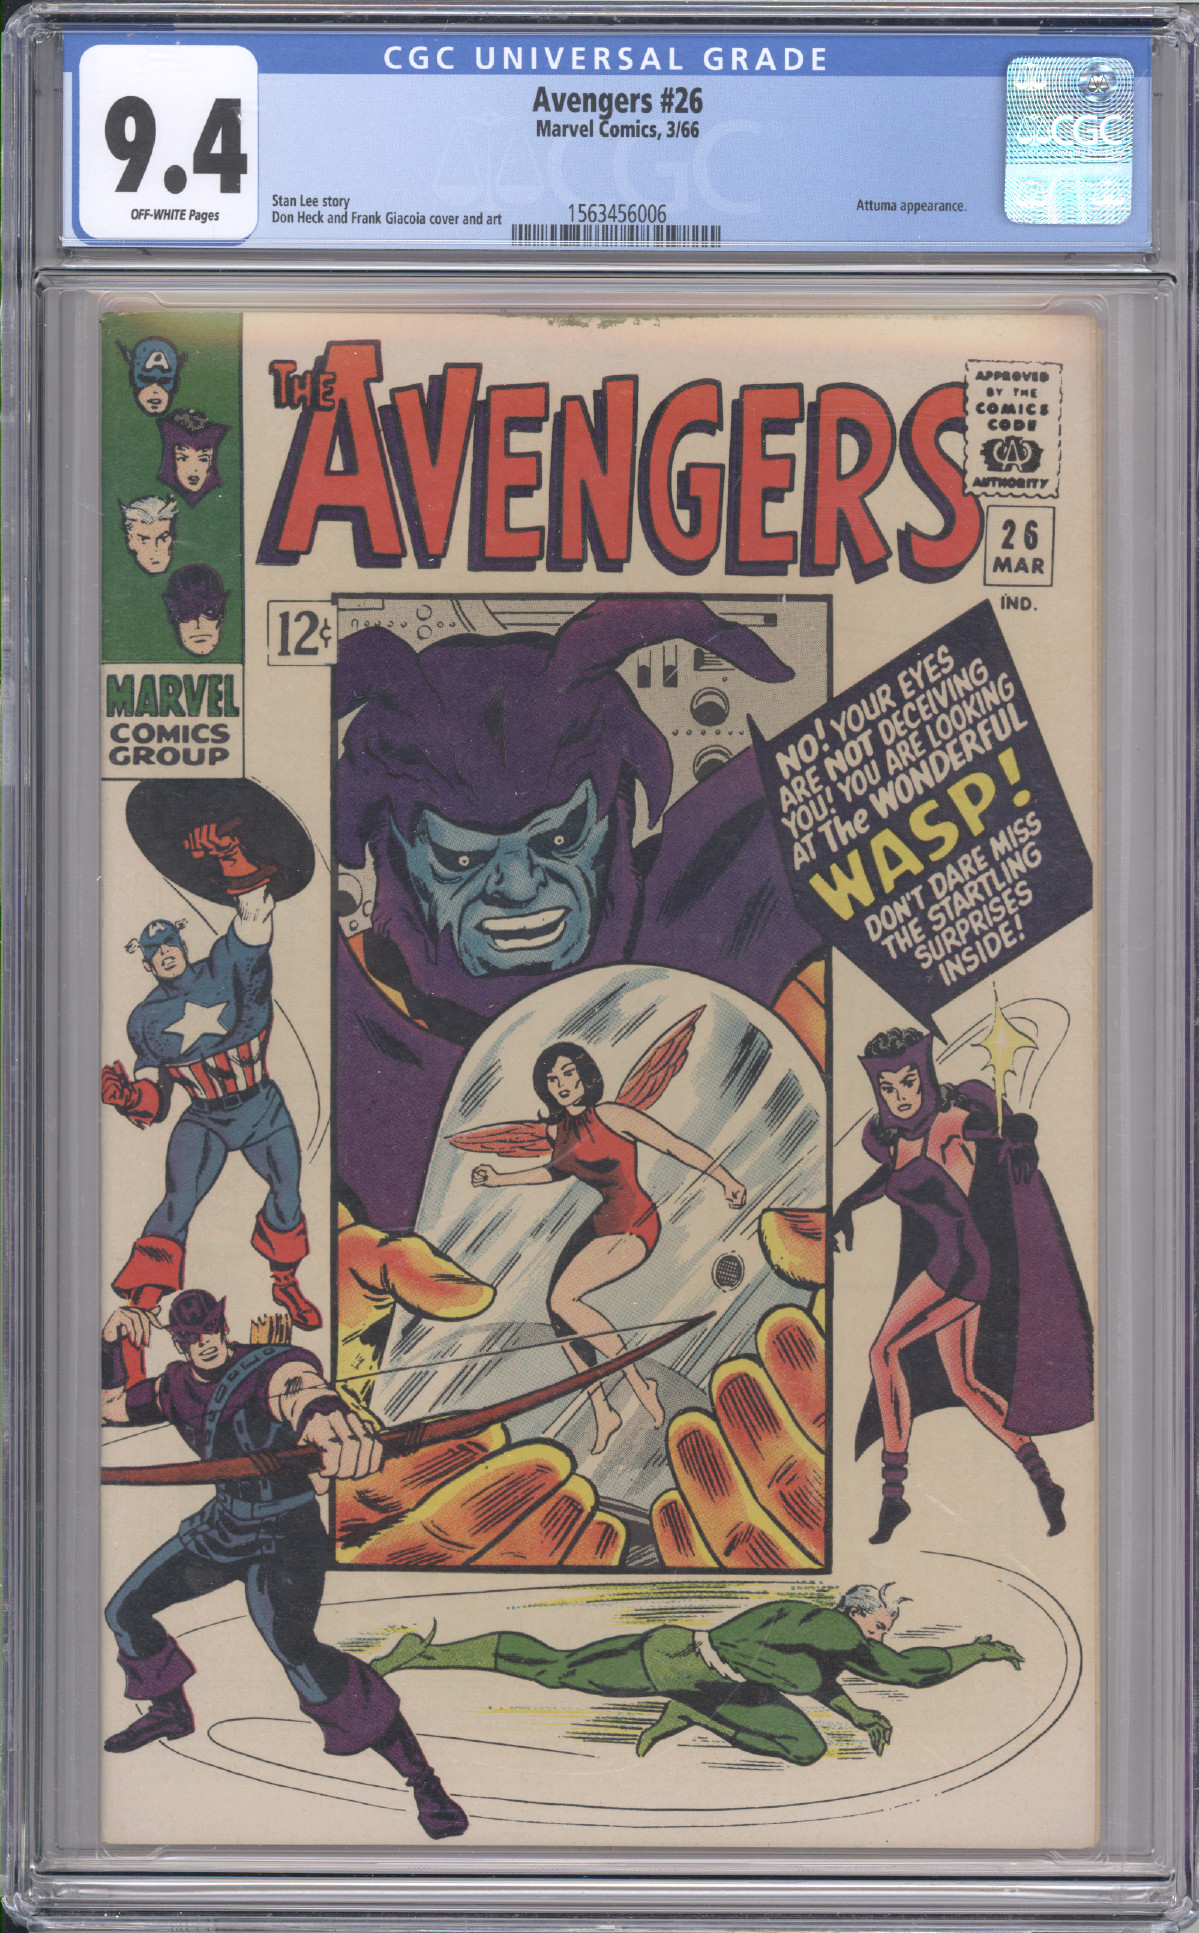 Avengers #26 front